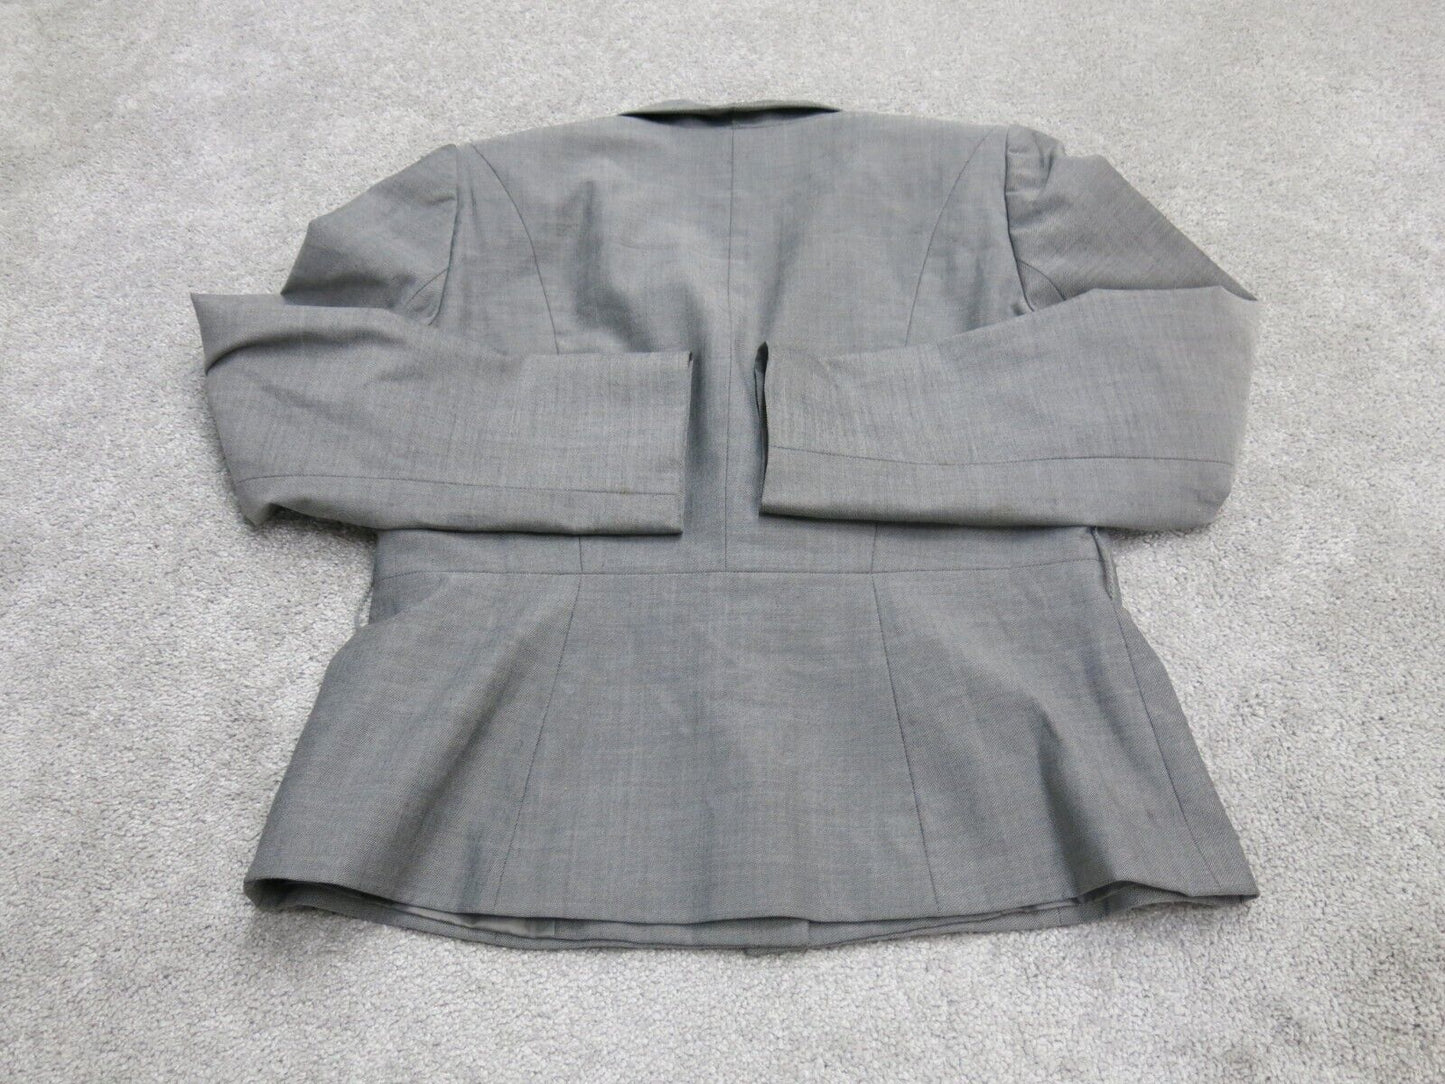 Tahari Mens Blazer Coat Jacket Front Button Long Sleeve Heather Gray Size 8P